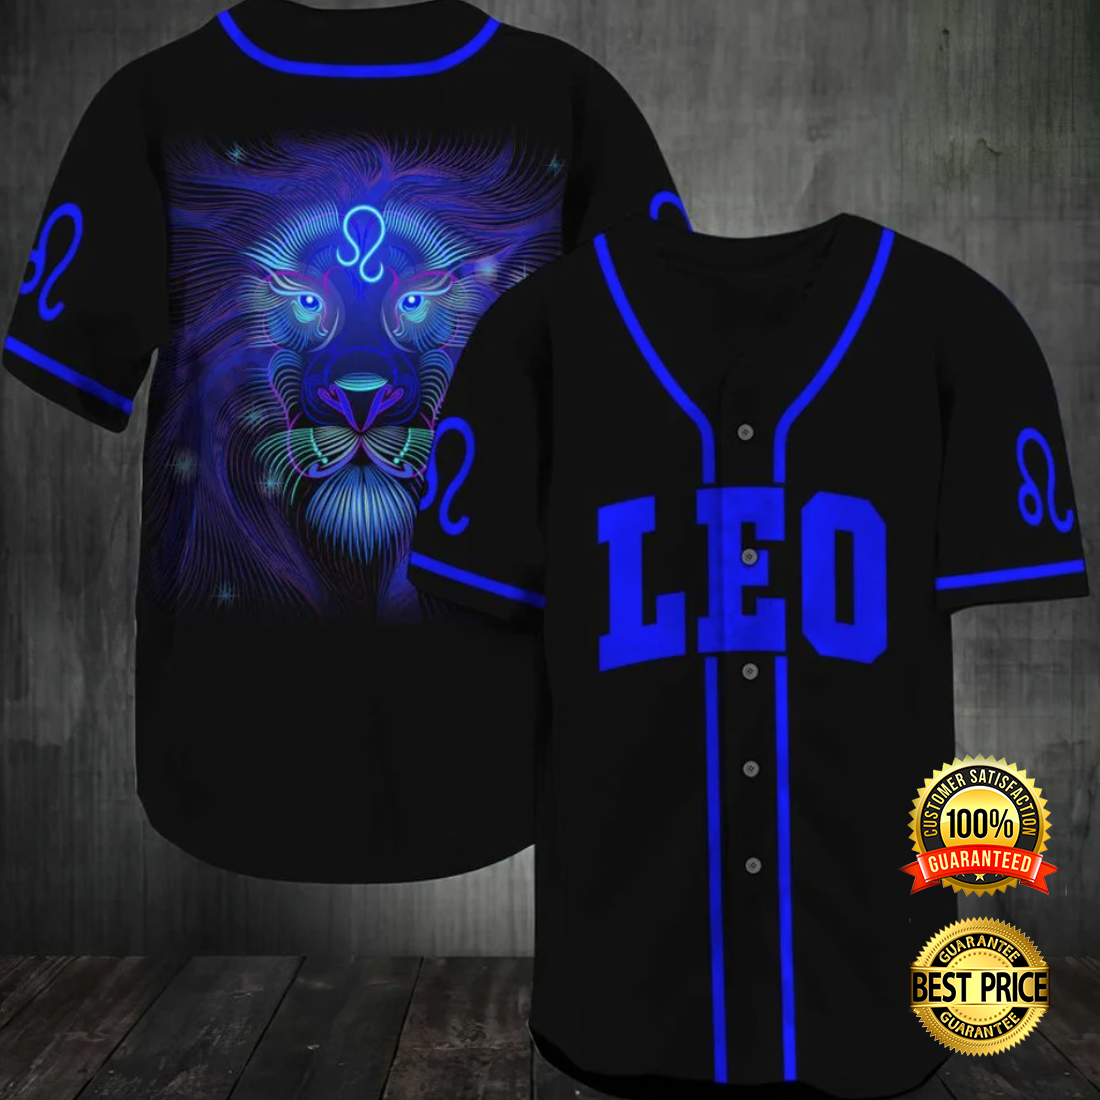 Leo baseball jersey